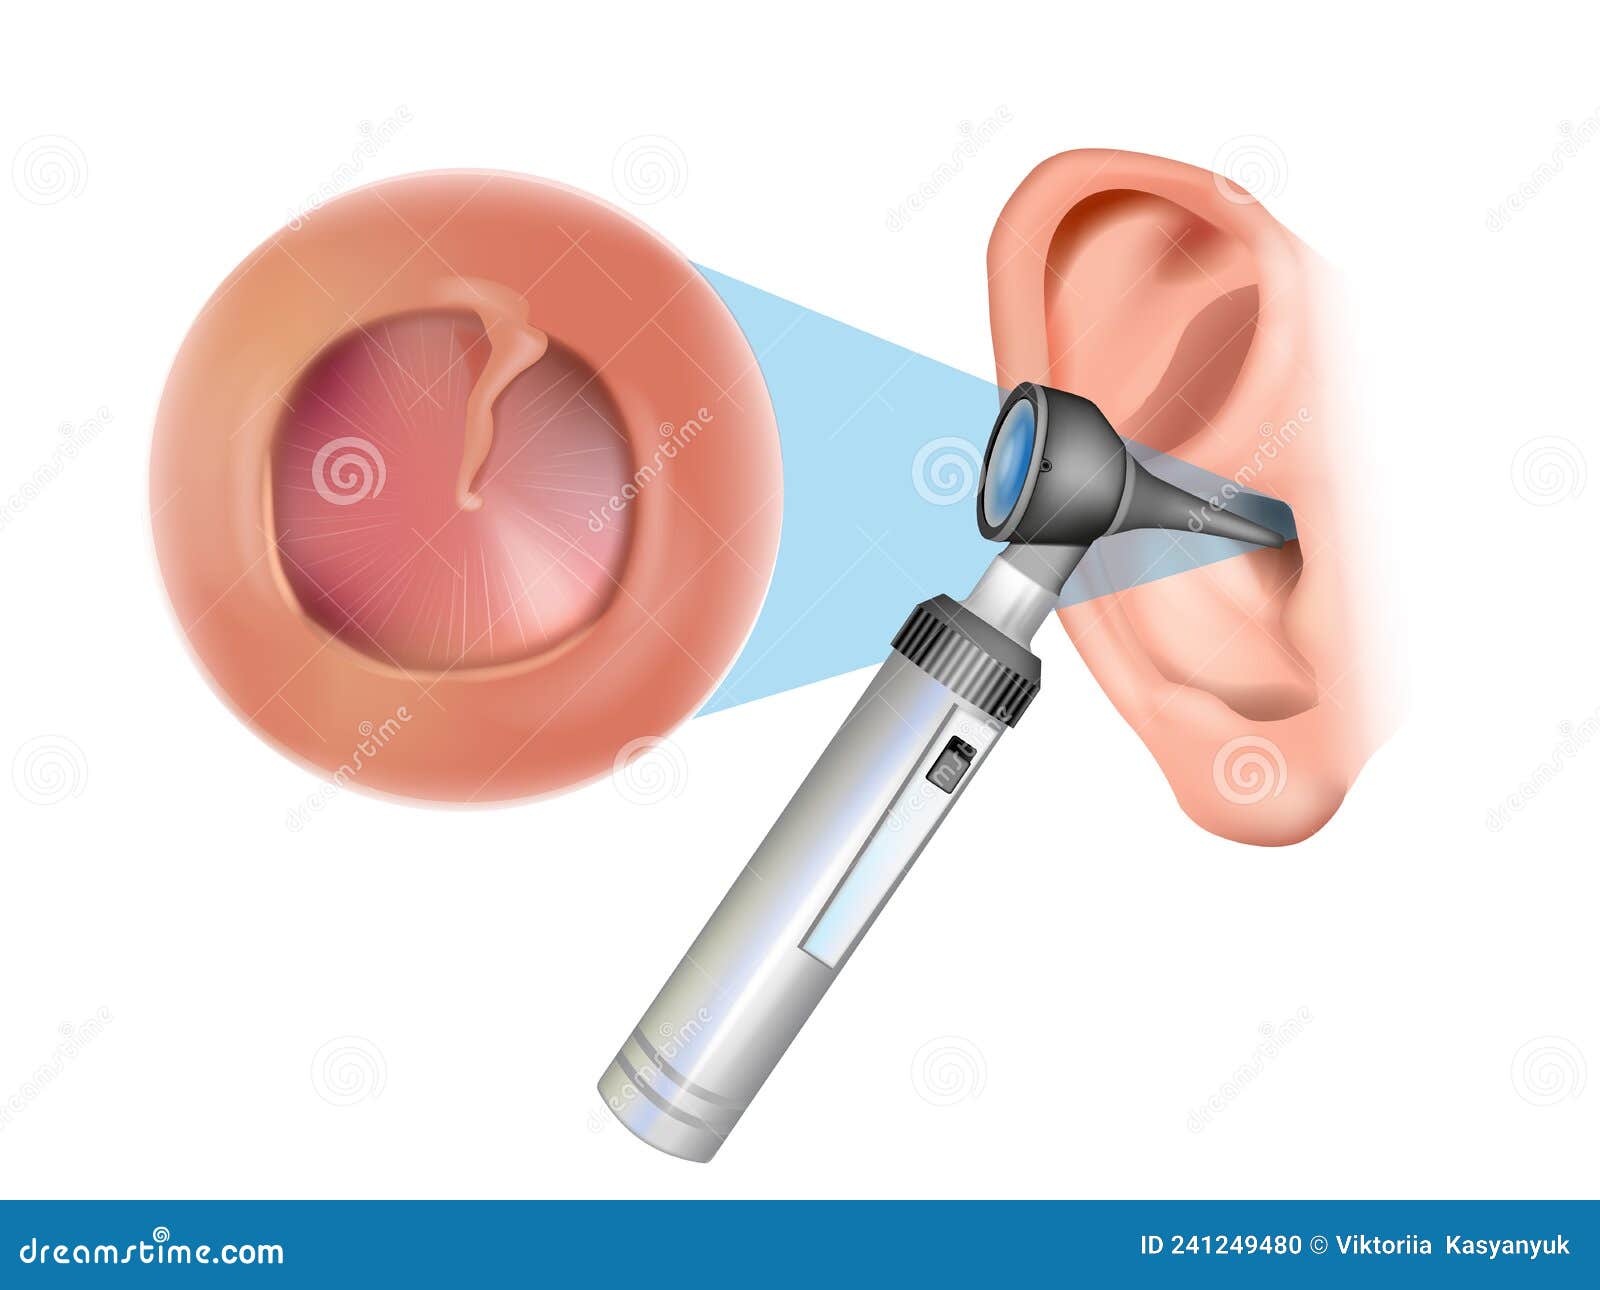 ear examination with an otoscope. otitis media with effusion: serous otitis media, secretory otitis media. iinflammation